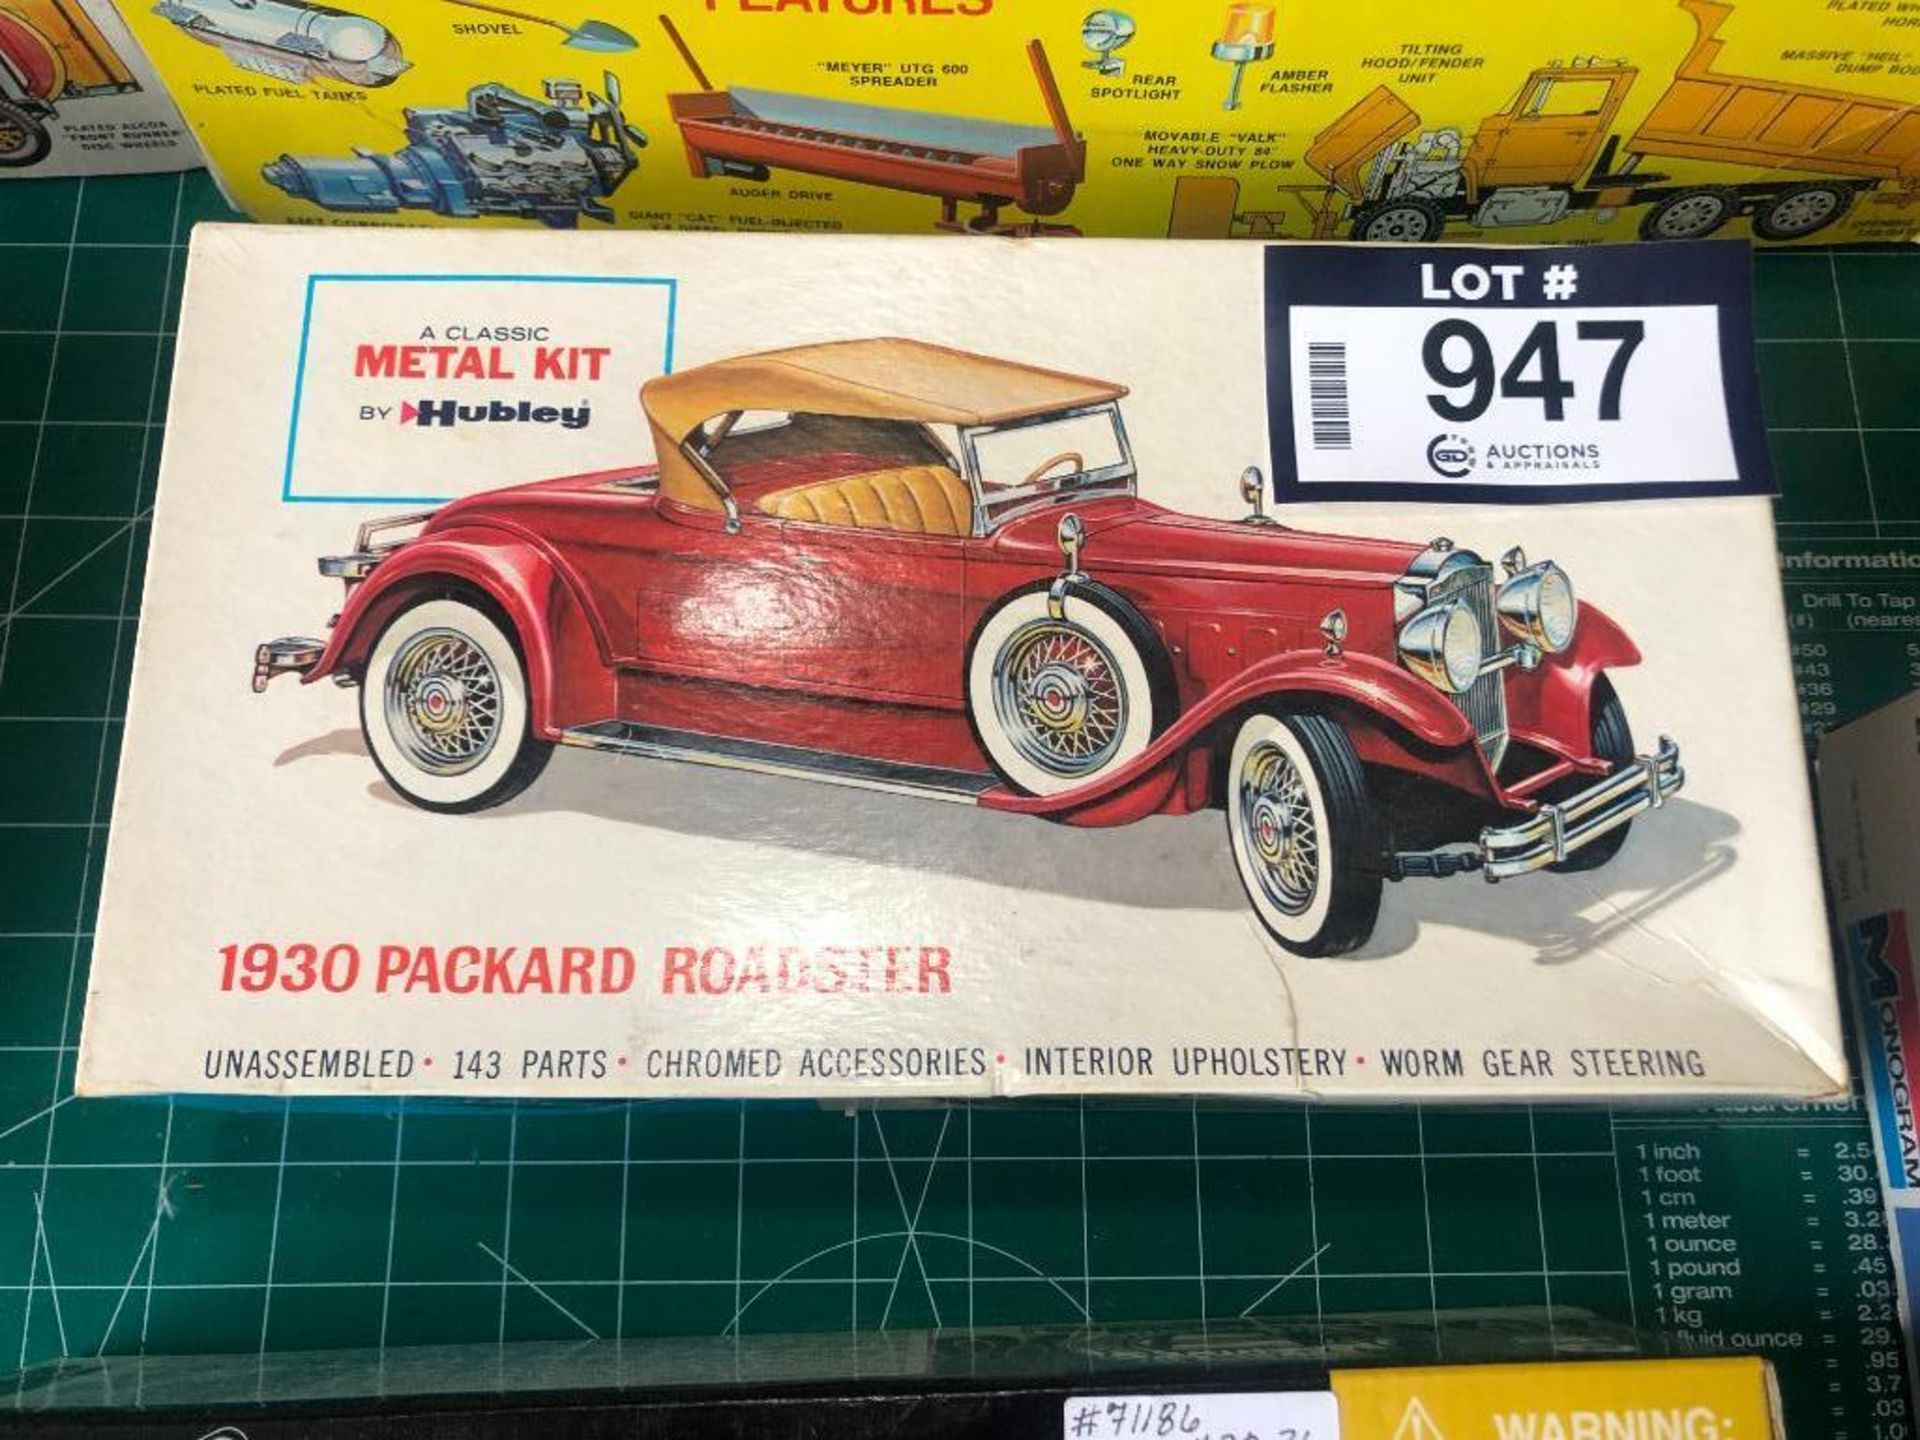 Hubley Classic Metal Kit 1930 Packard Roadster 1/22 Scale Model